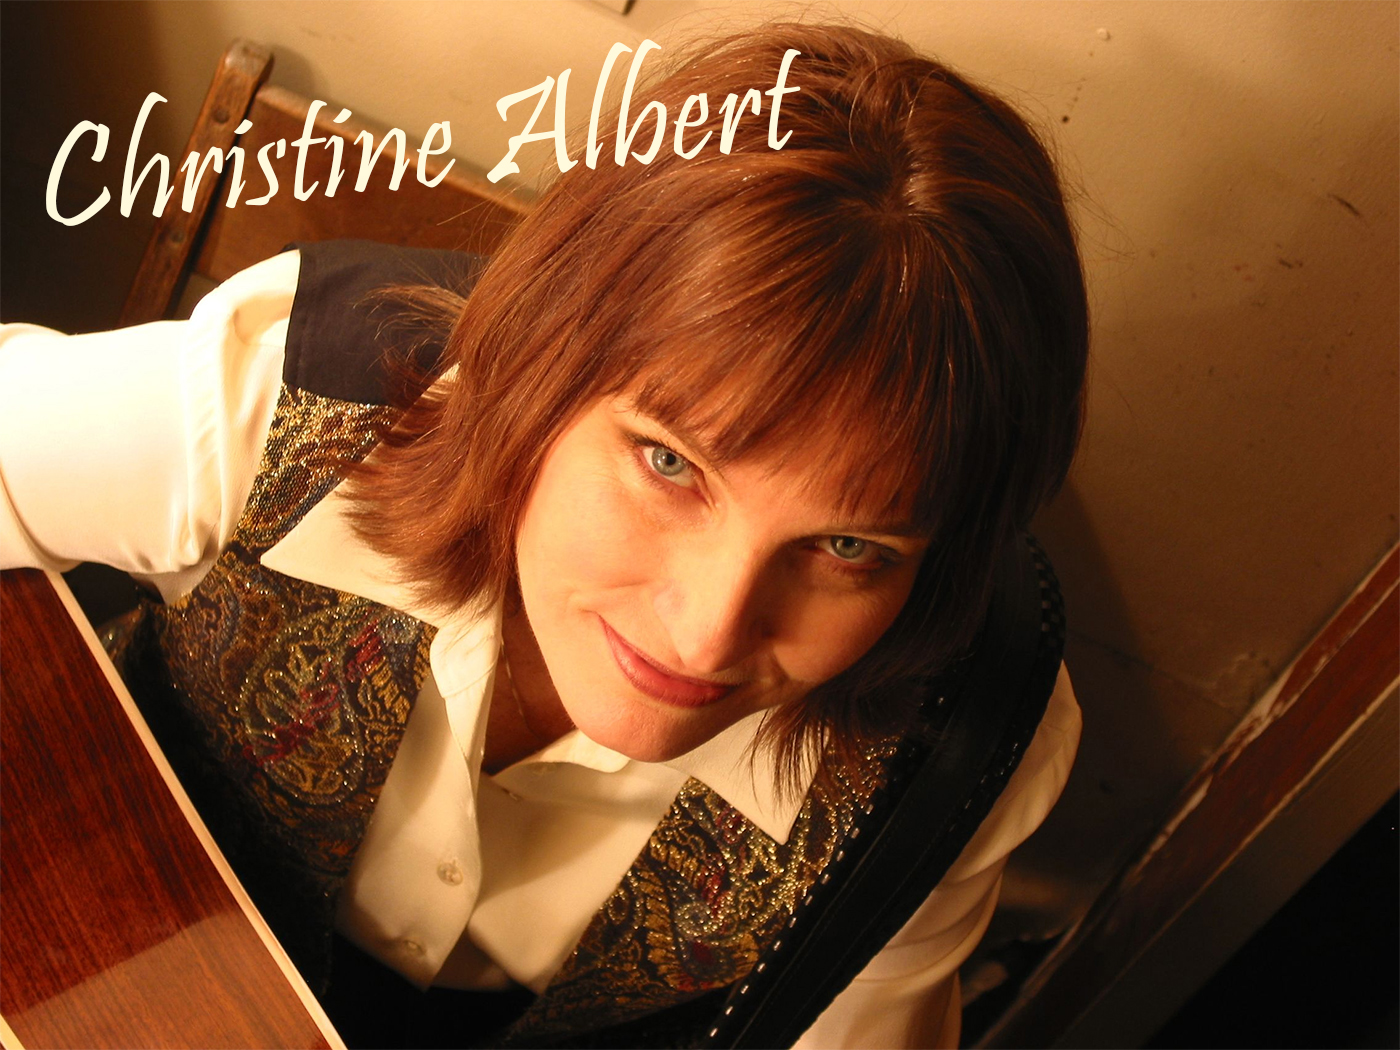 Christine Albert with guitar